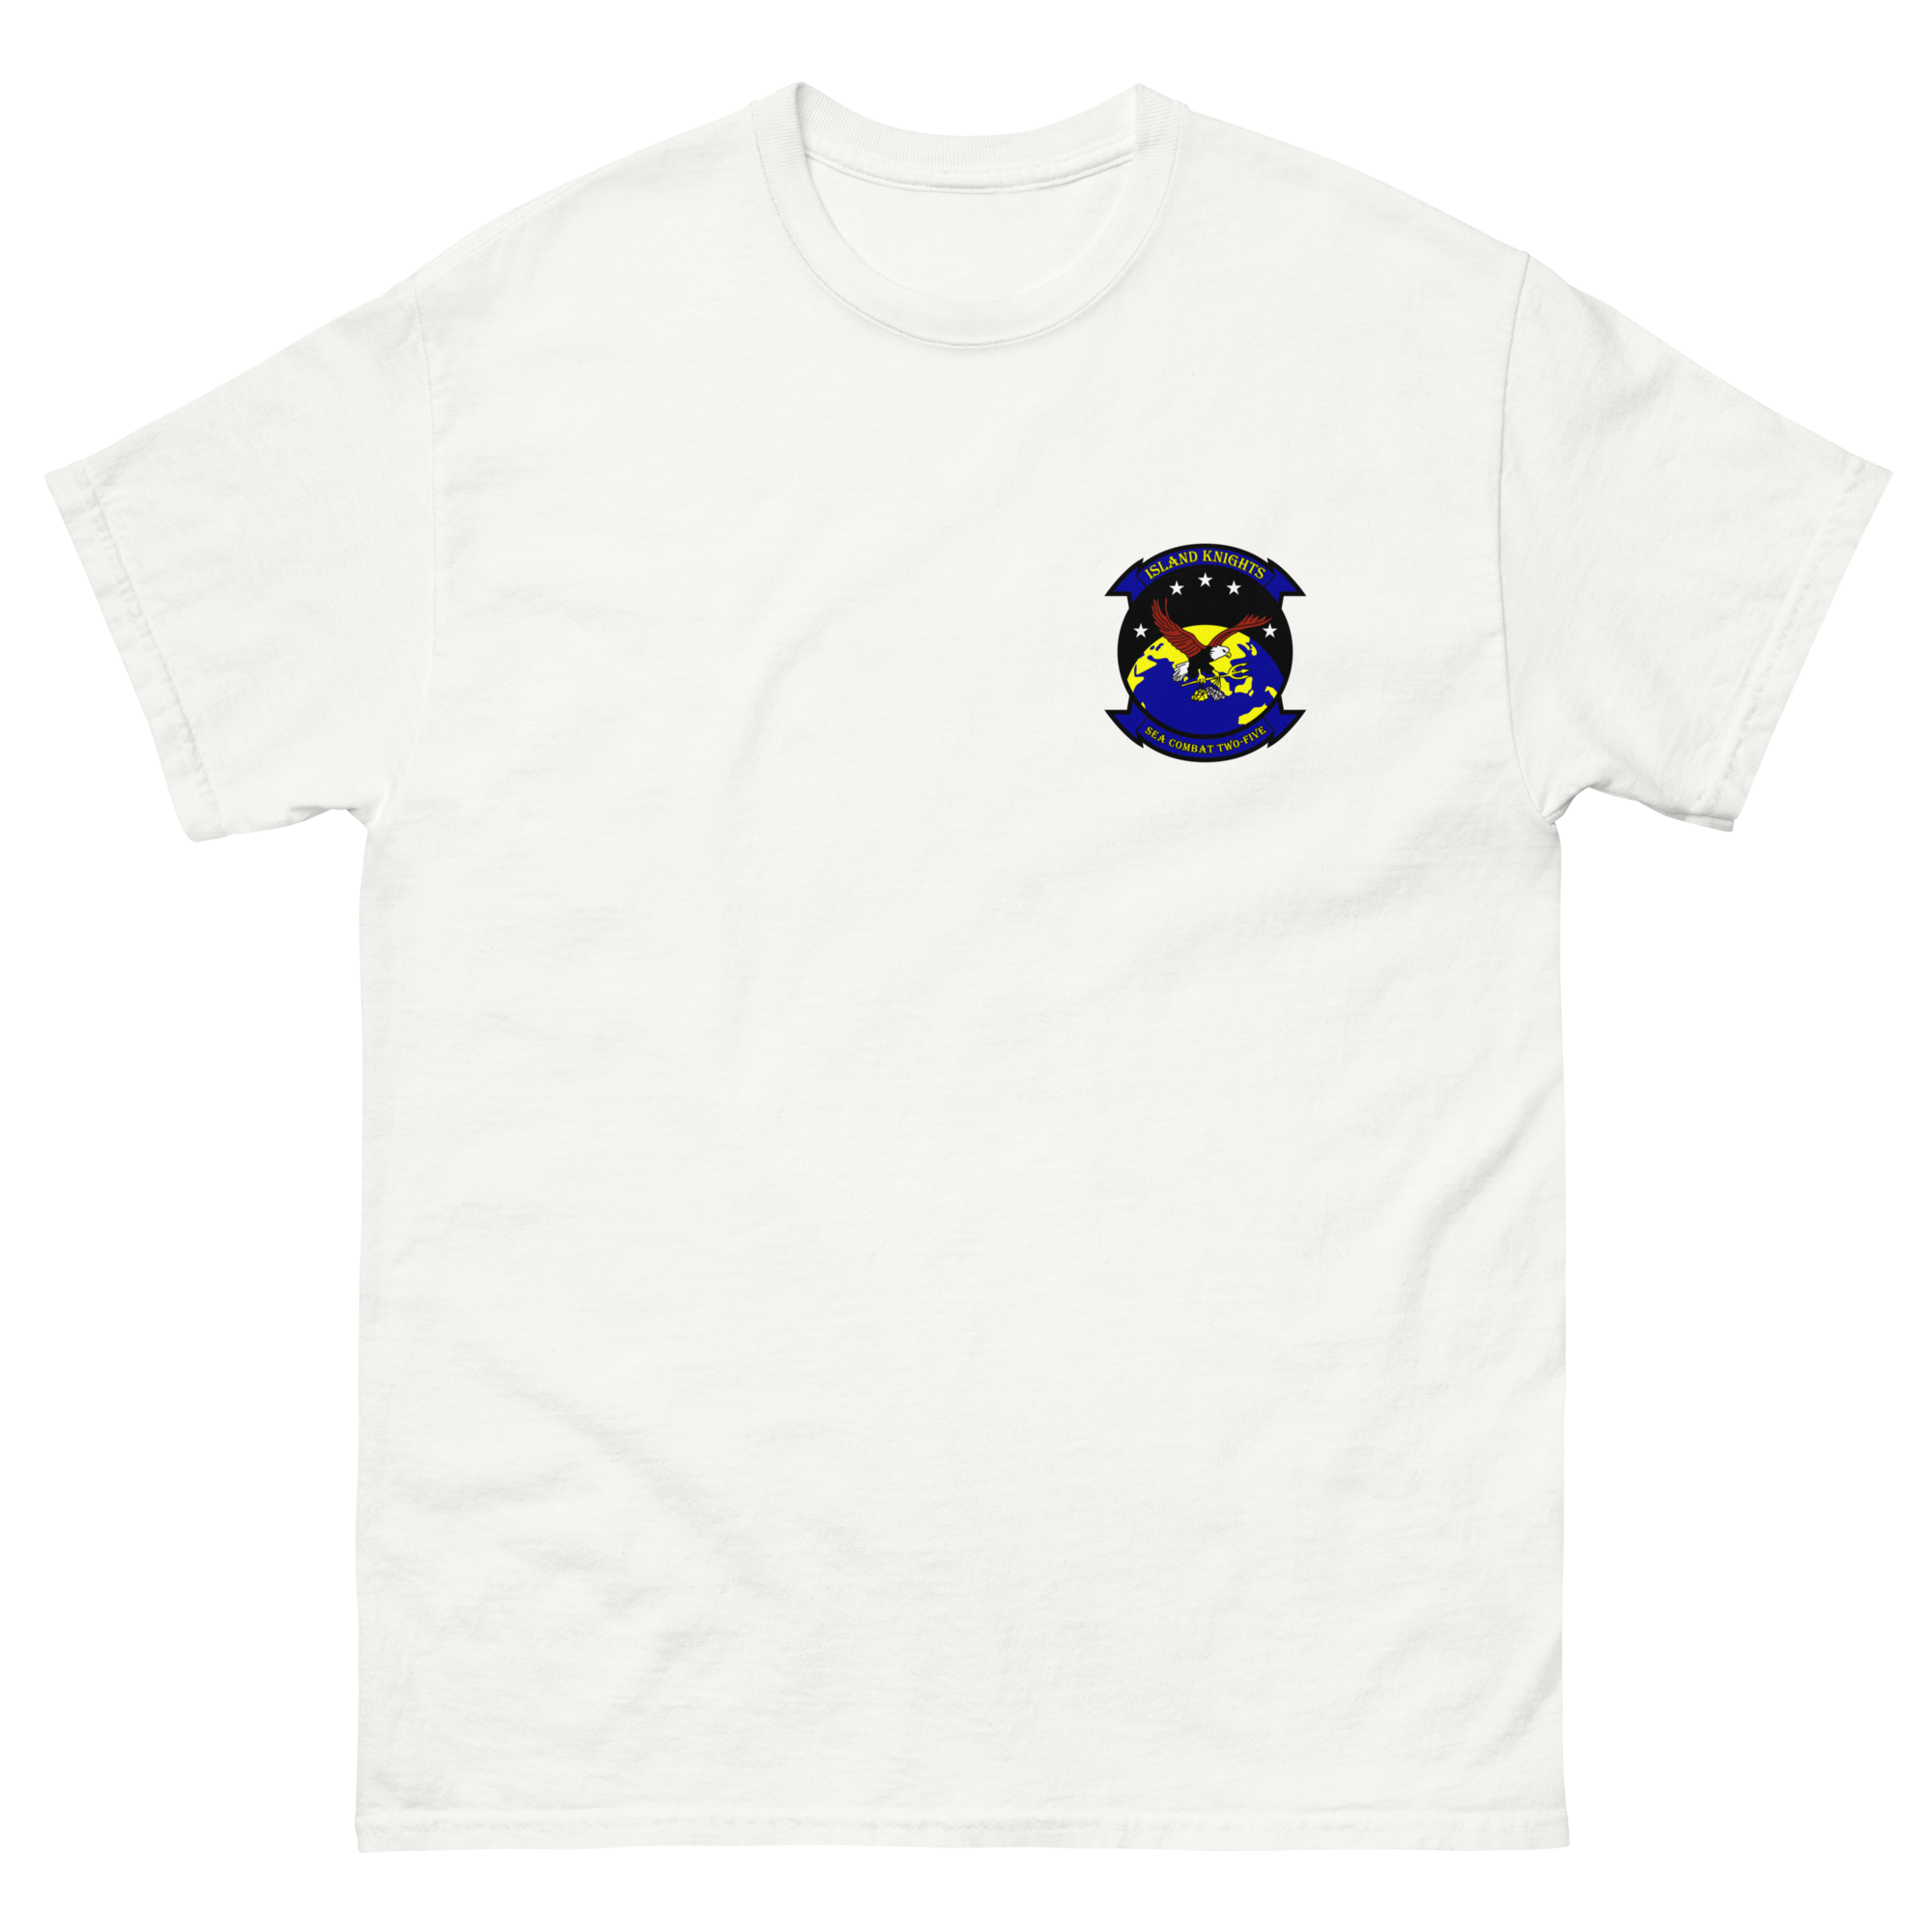 HSC-25 Island Knights Squadron Crest T-Shirt